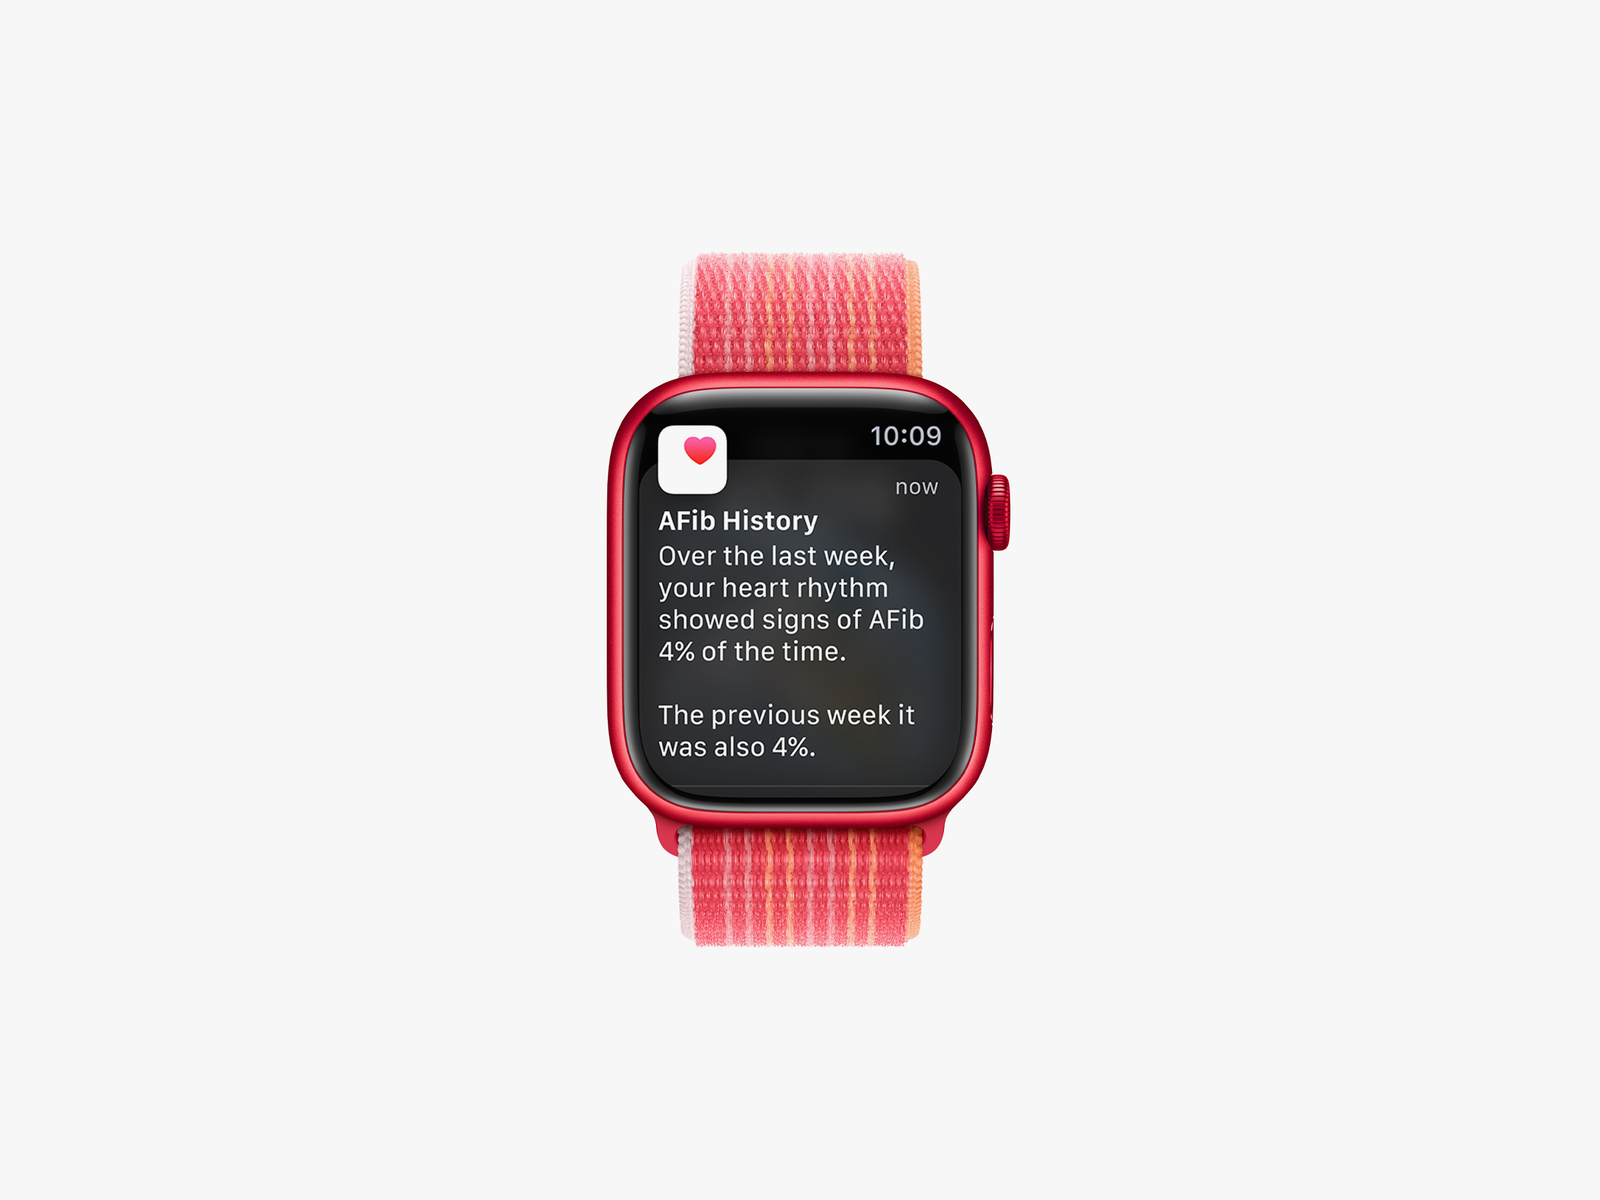 Apple Watch تعرض تاريخ AFiB